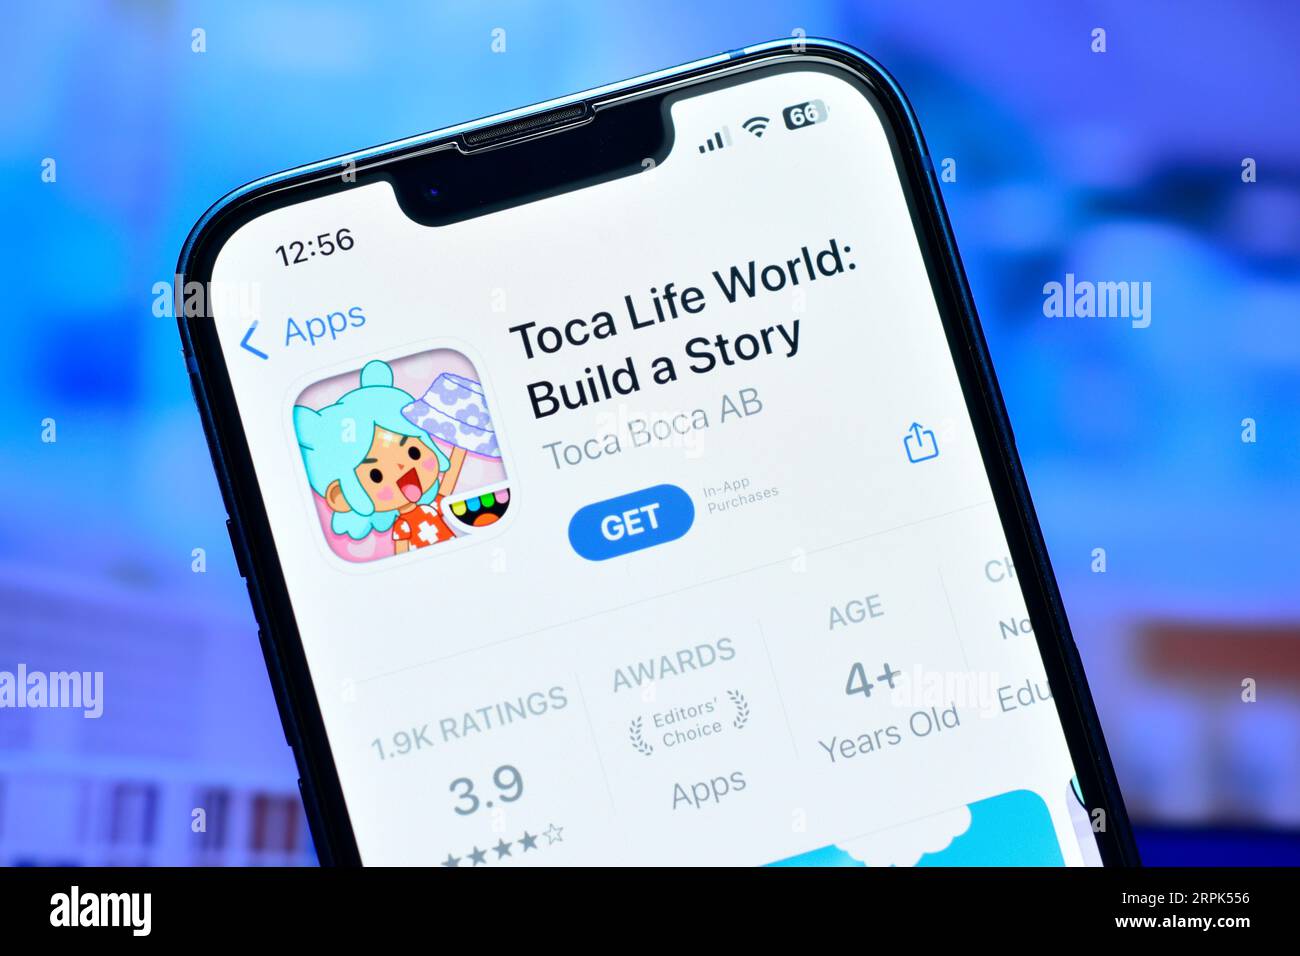 Toca Life World na App Store